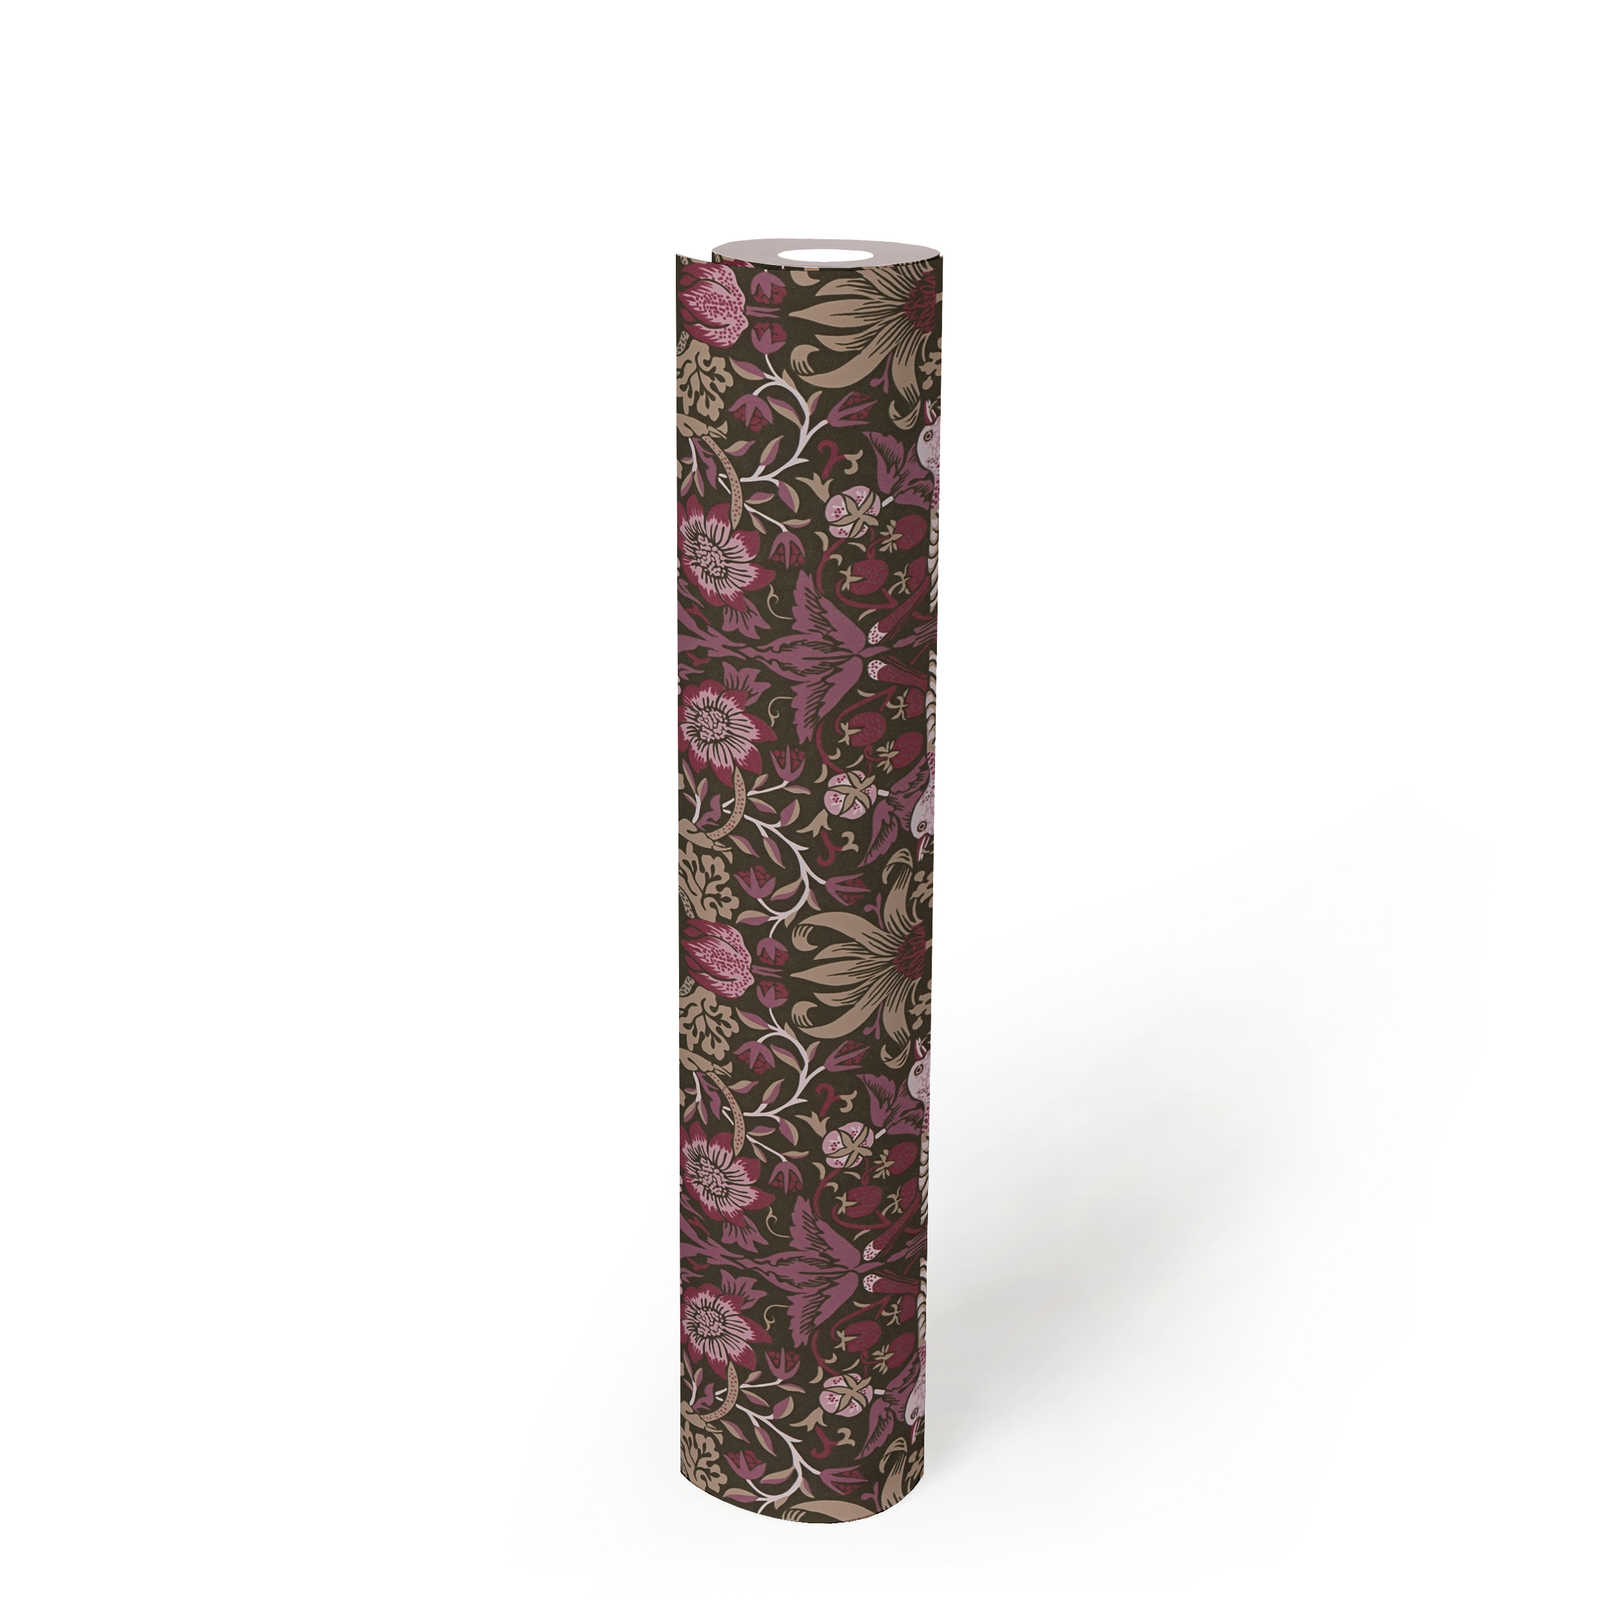             Non-woven wallpaper floral pattern with birds & berries - purple , beige, black
        